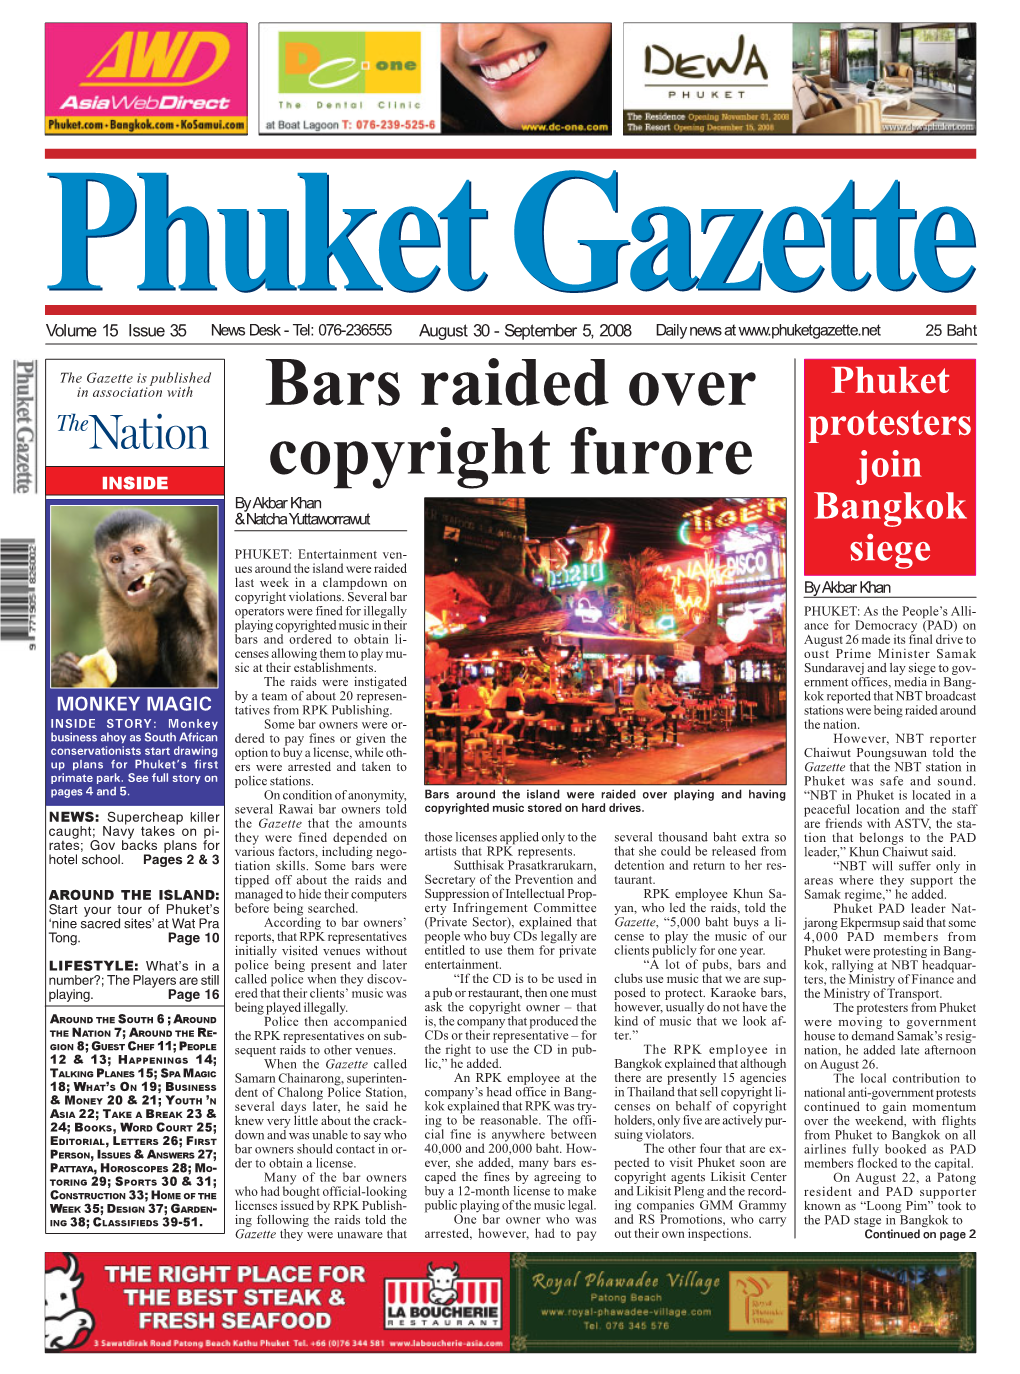 Bars Raided Over Copyright Furore